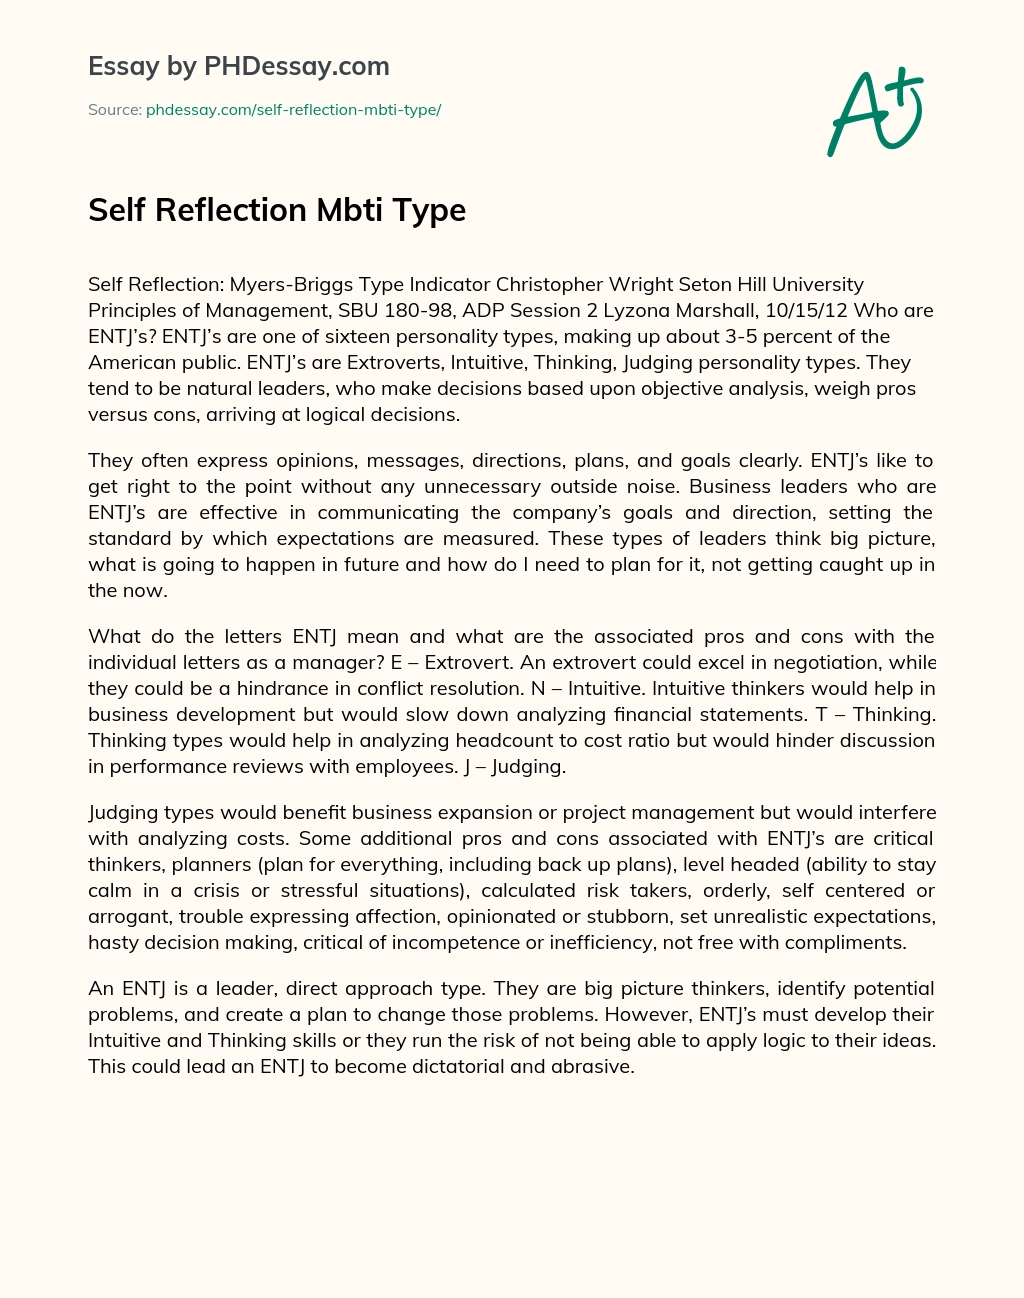 Self Reflection Mbti Type Phdessay Com